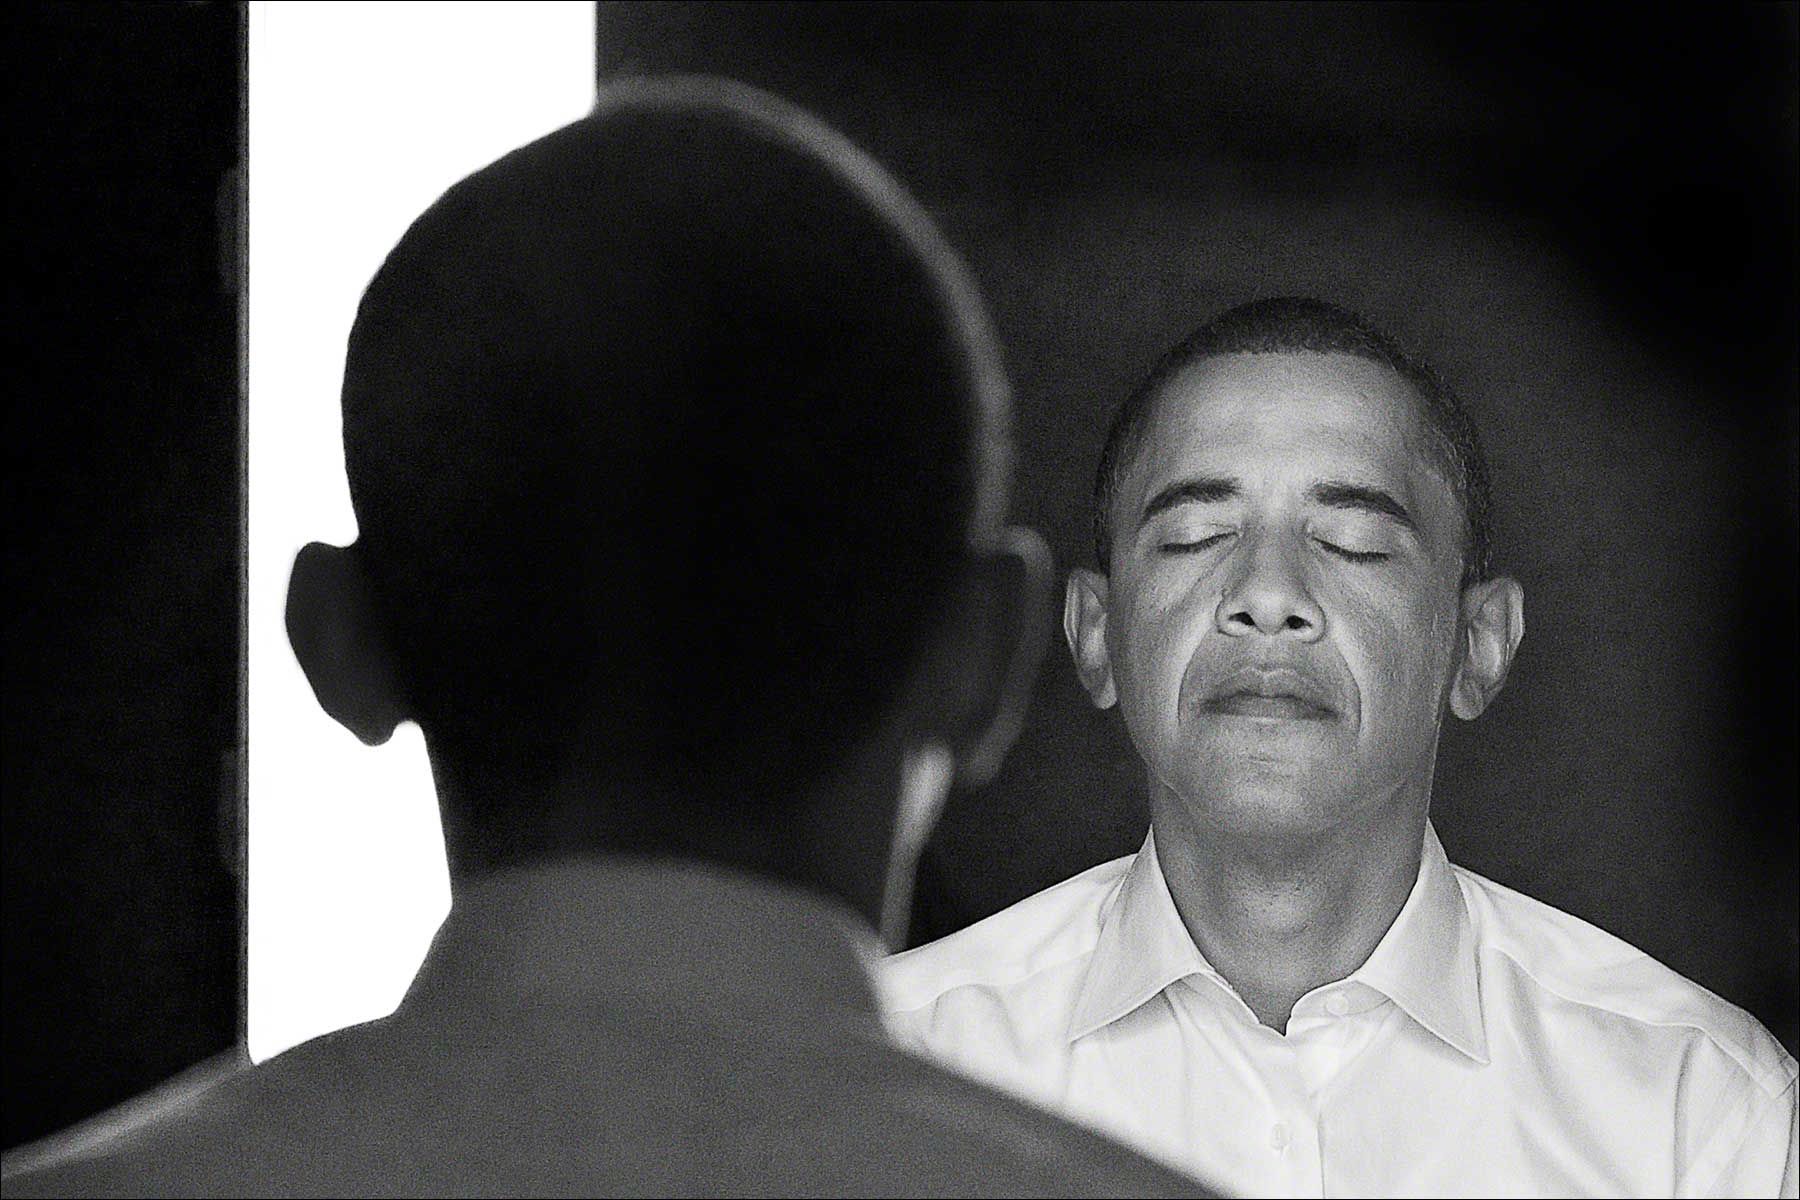 Barack Obama - Portrait of Hope